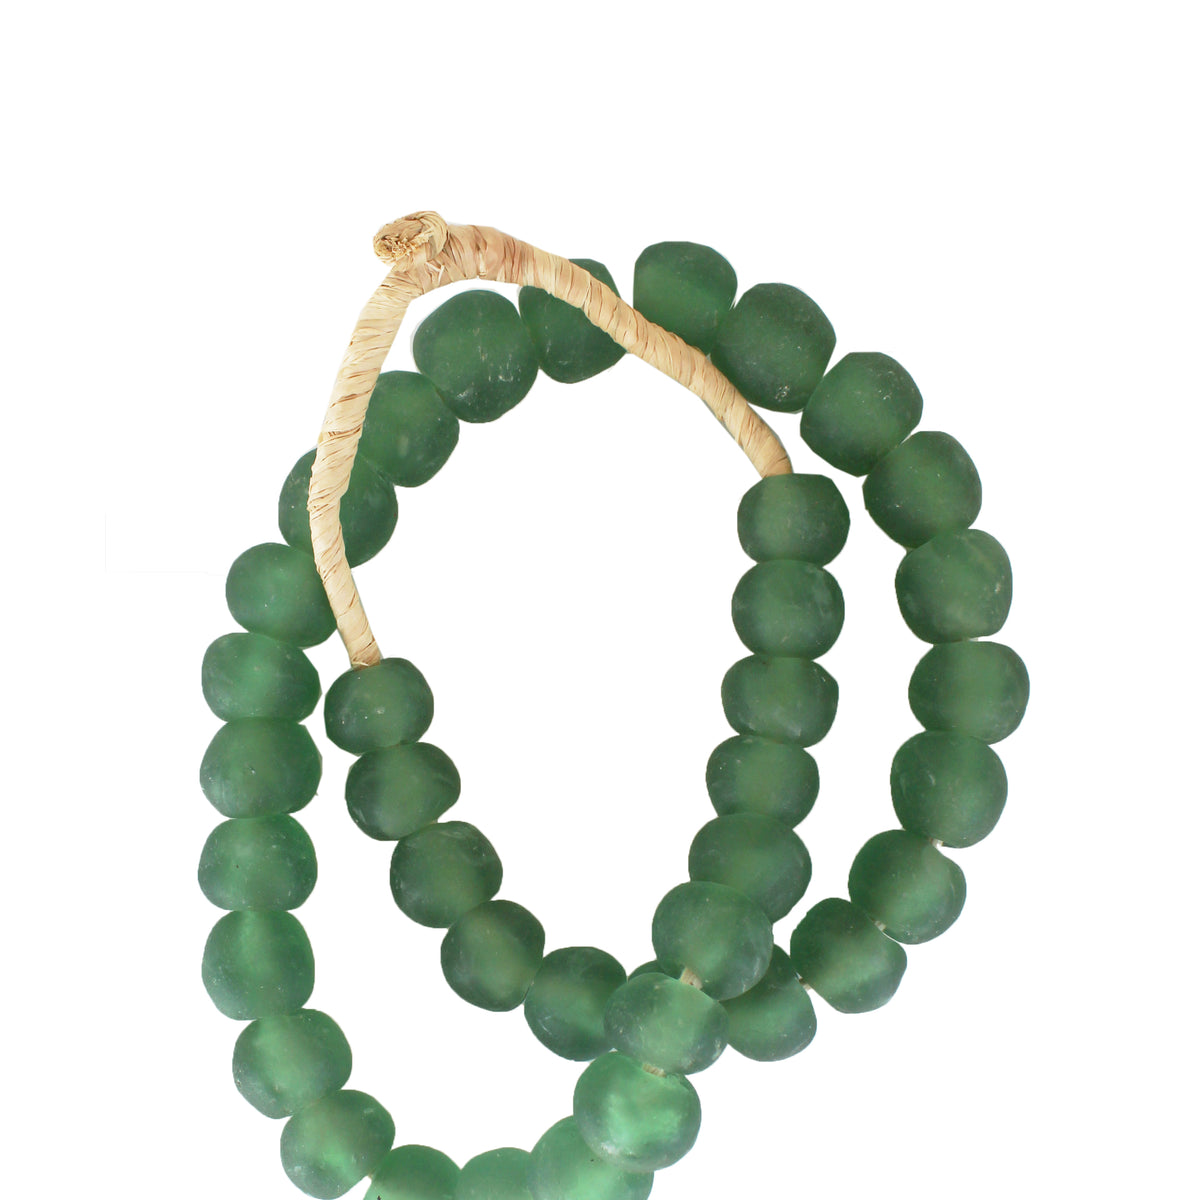 SEWACC 60pcs Glass Beads Crackle Glass Beads Rhinestone Accessories Green  Jewelry Crystal Loose Beads Charm Jewelery Making Beads Colors Glass Beads